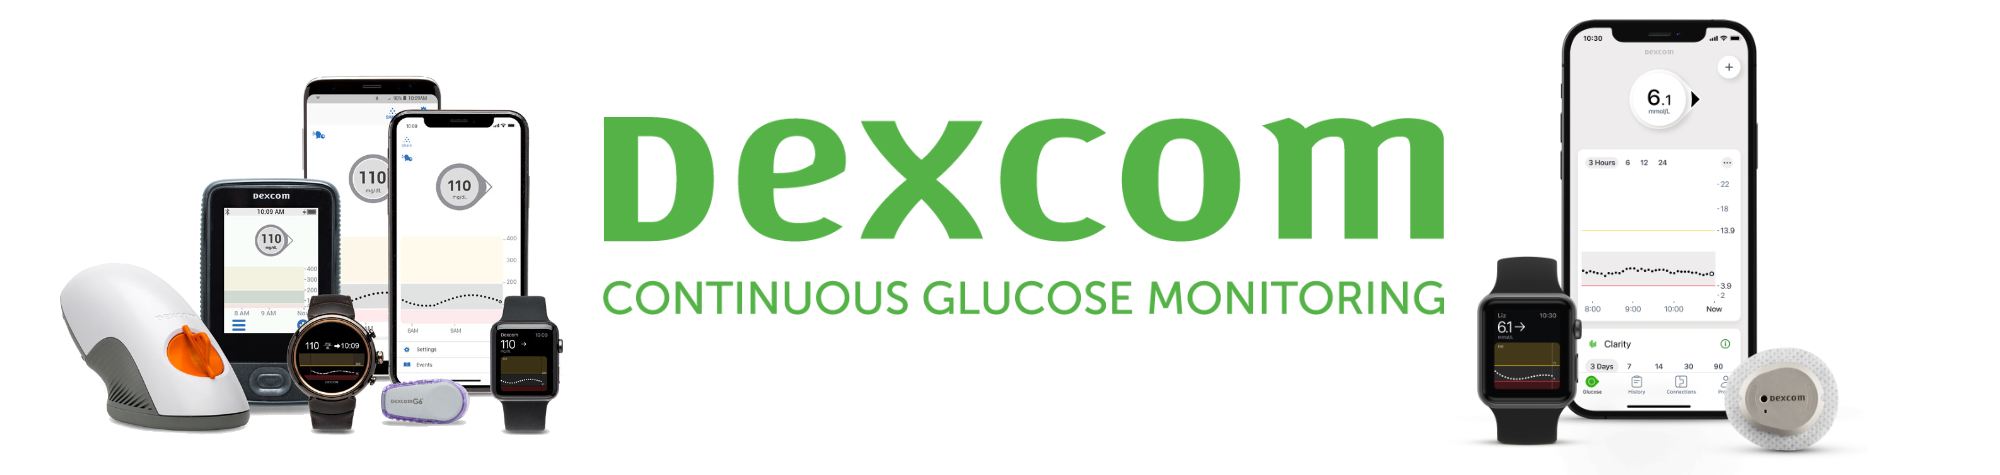 dexcom banner 3